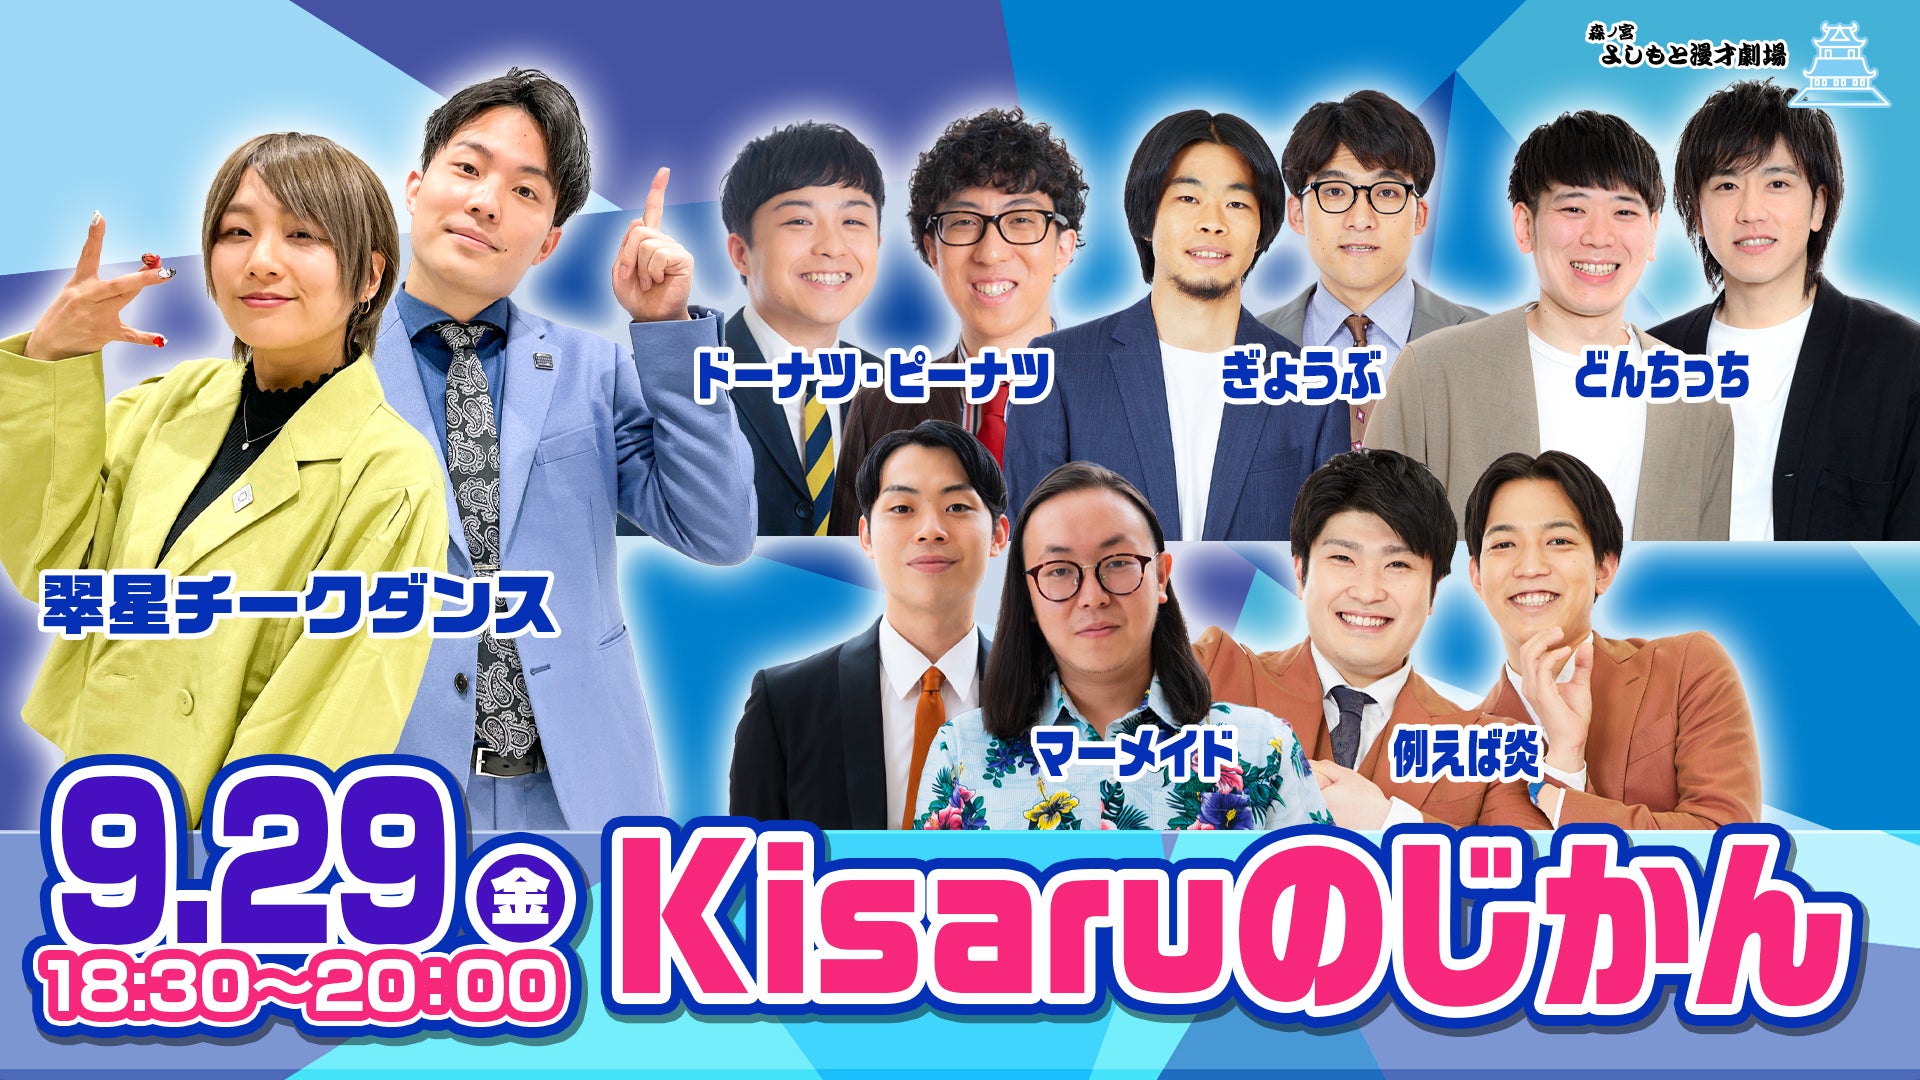 Kisaruのじかん（9/29 18:30） – FANY Online Ticket